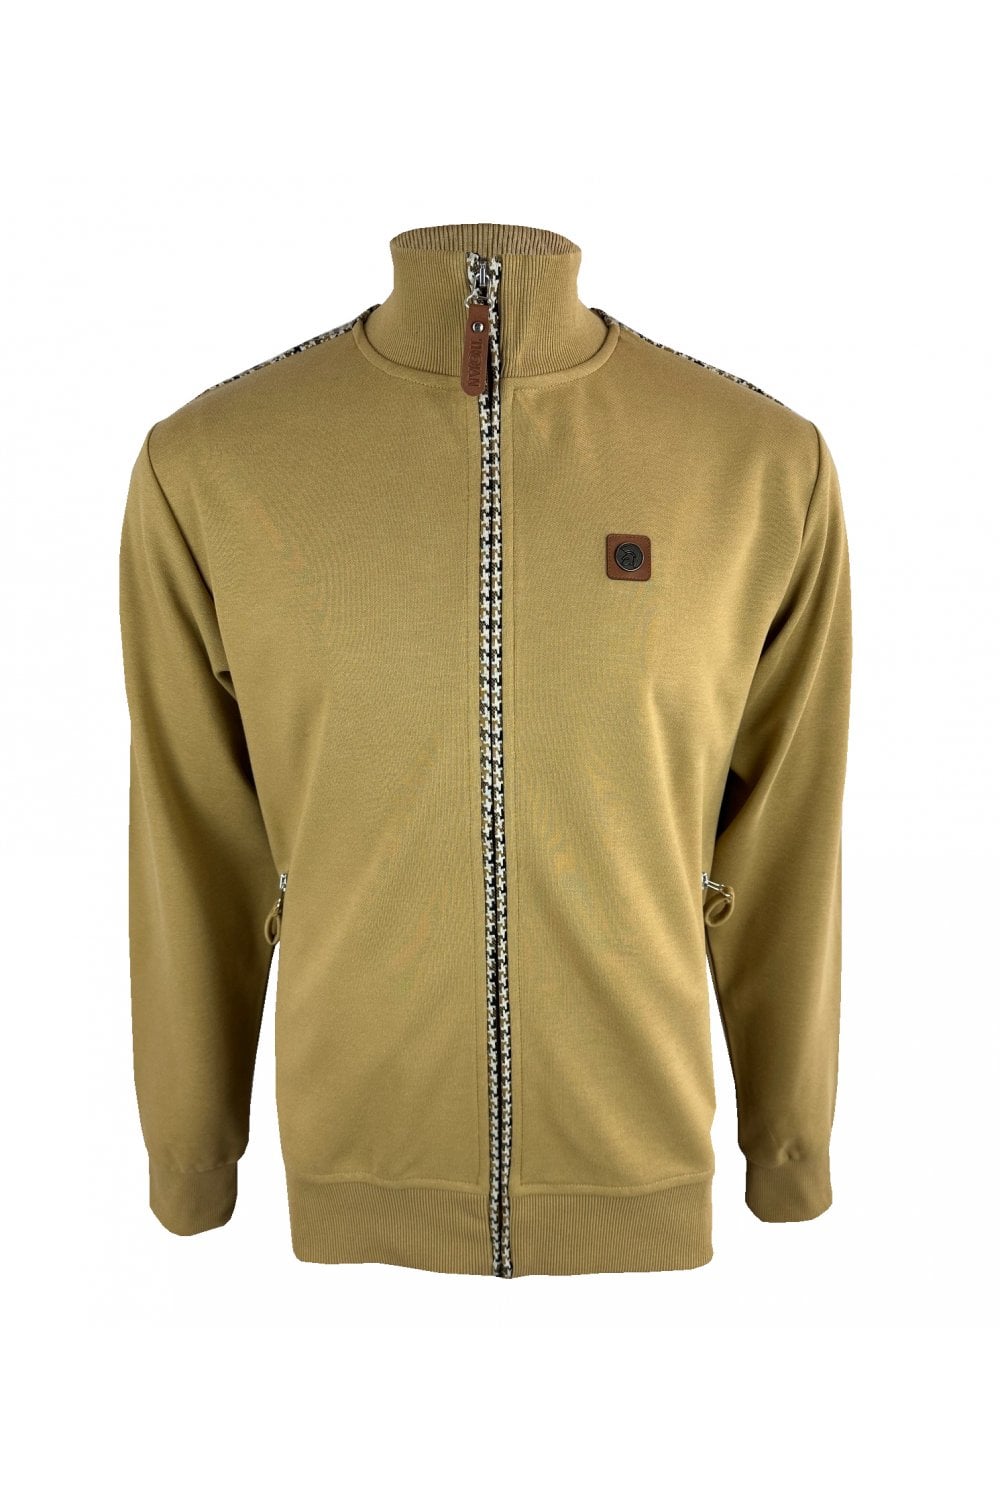 TROJAN Houndstooth Trim 1/4 Zip Sweater TR/8856 Camel - Raw Menswear